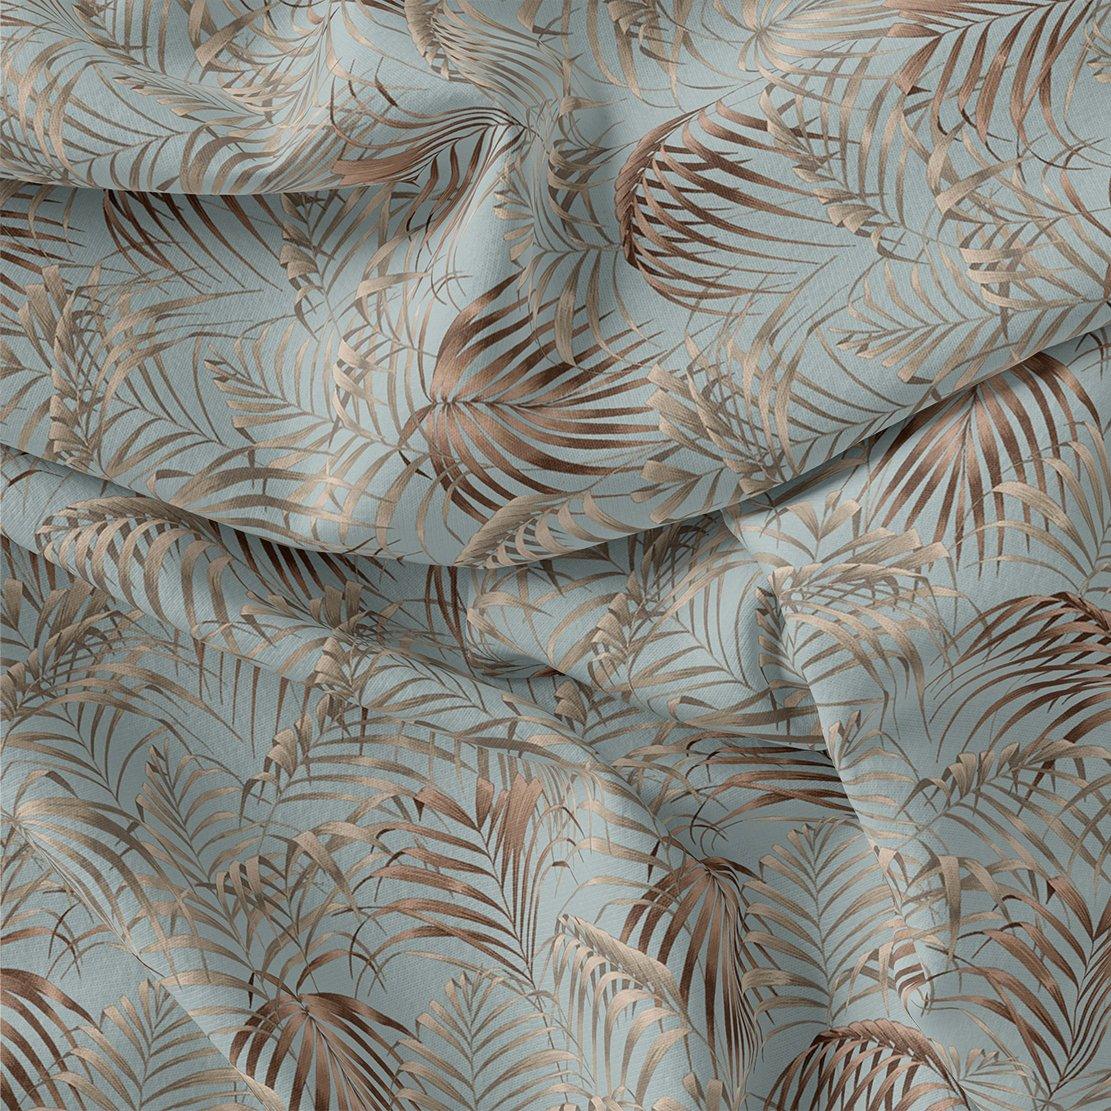 Tropical Garden Leaves Digital Printed Fabric - Upada Silk - FAB VOGUE Studio®